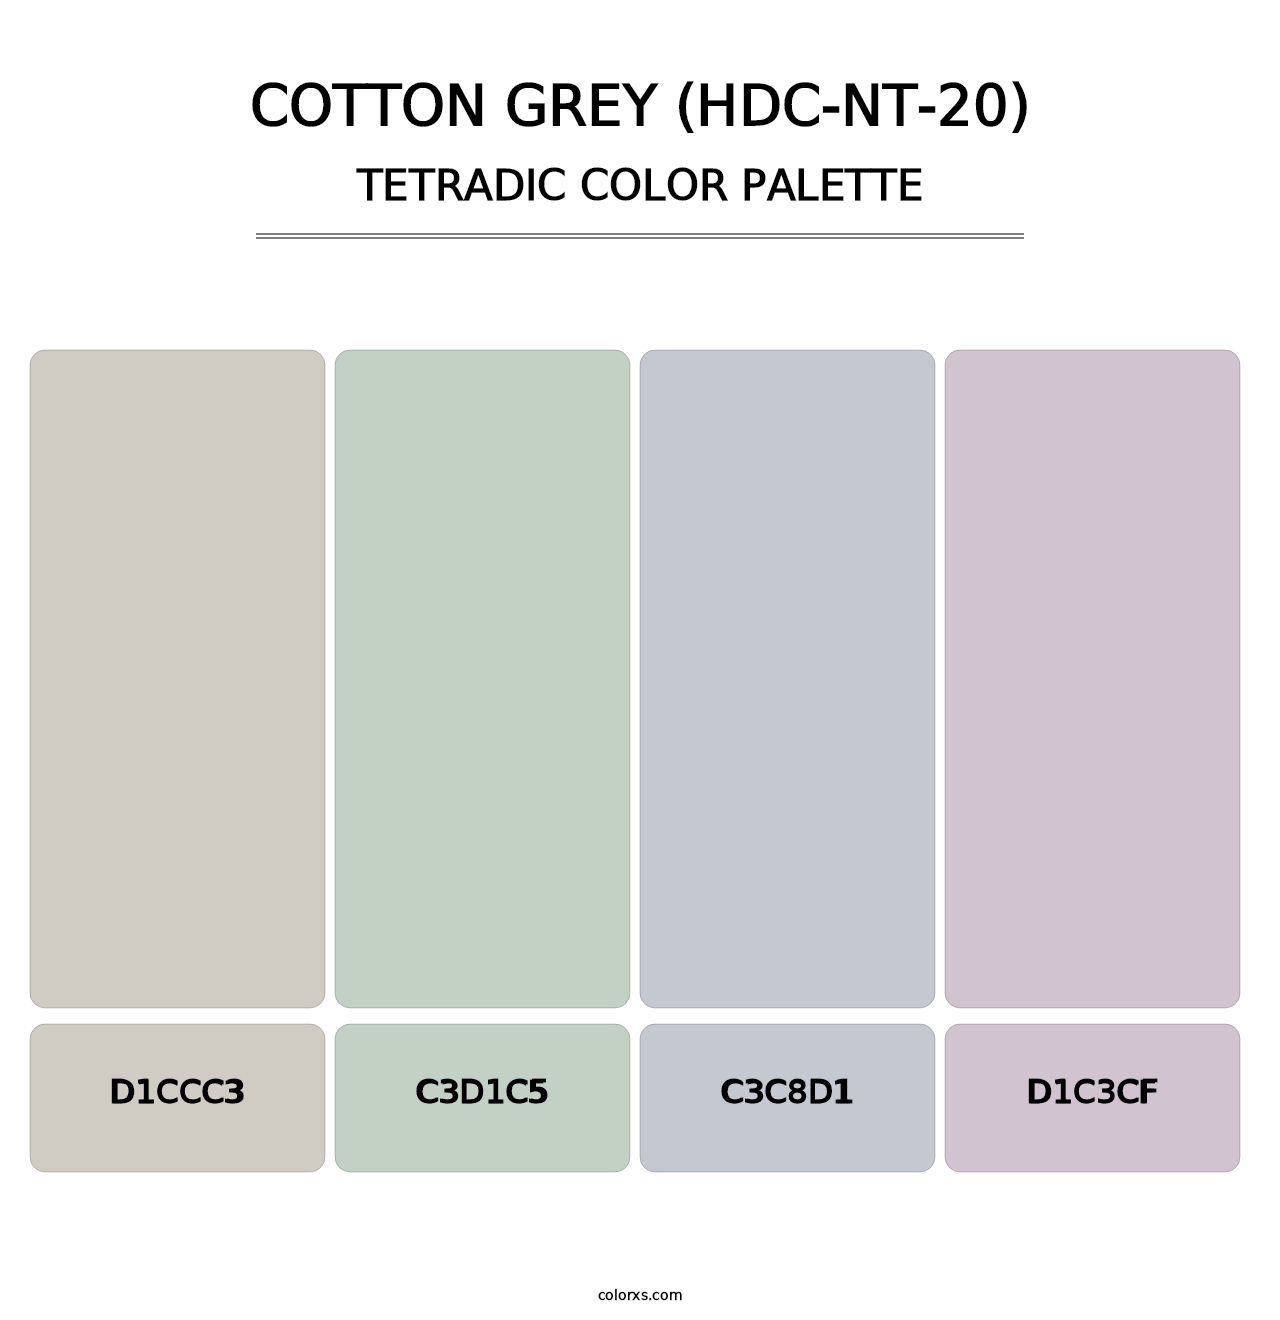 Cotton Grey (HDC-NT-20) - Tetradic Color Palette